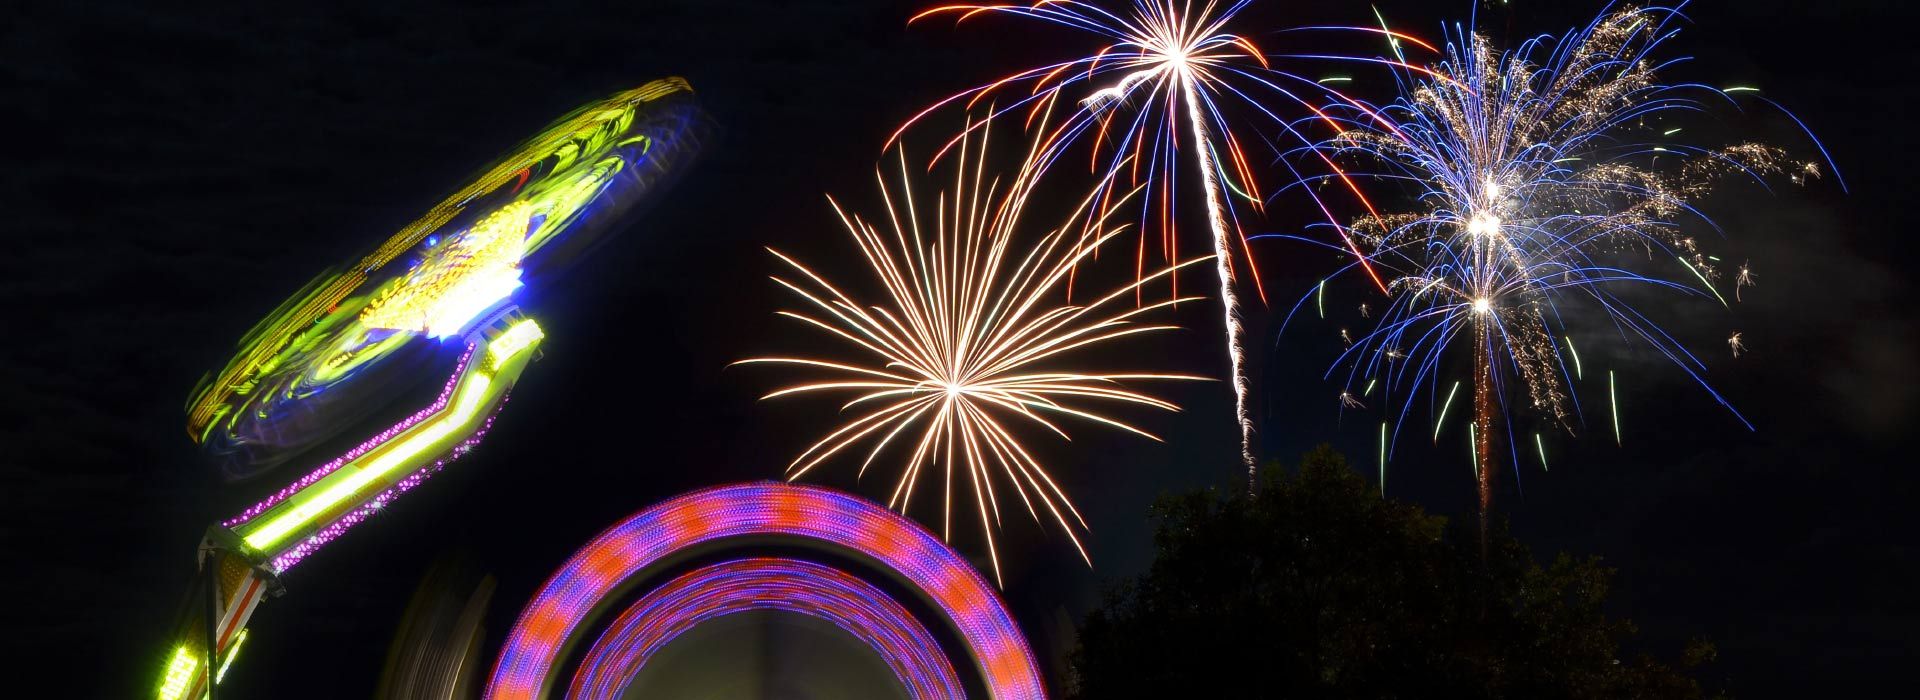 KCs Fireworks Displays | Fireworks Qld & NSW